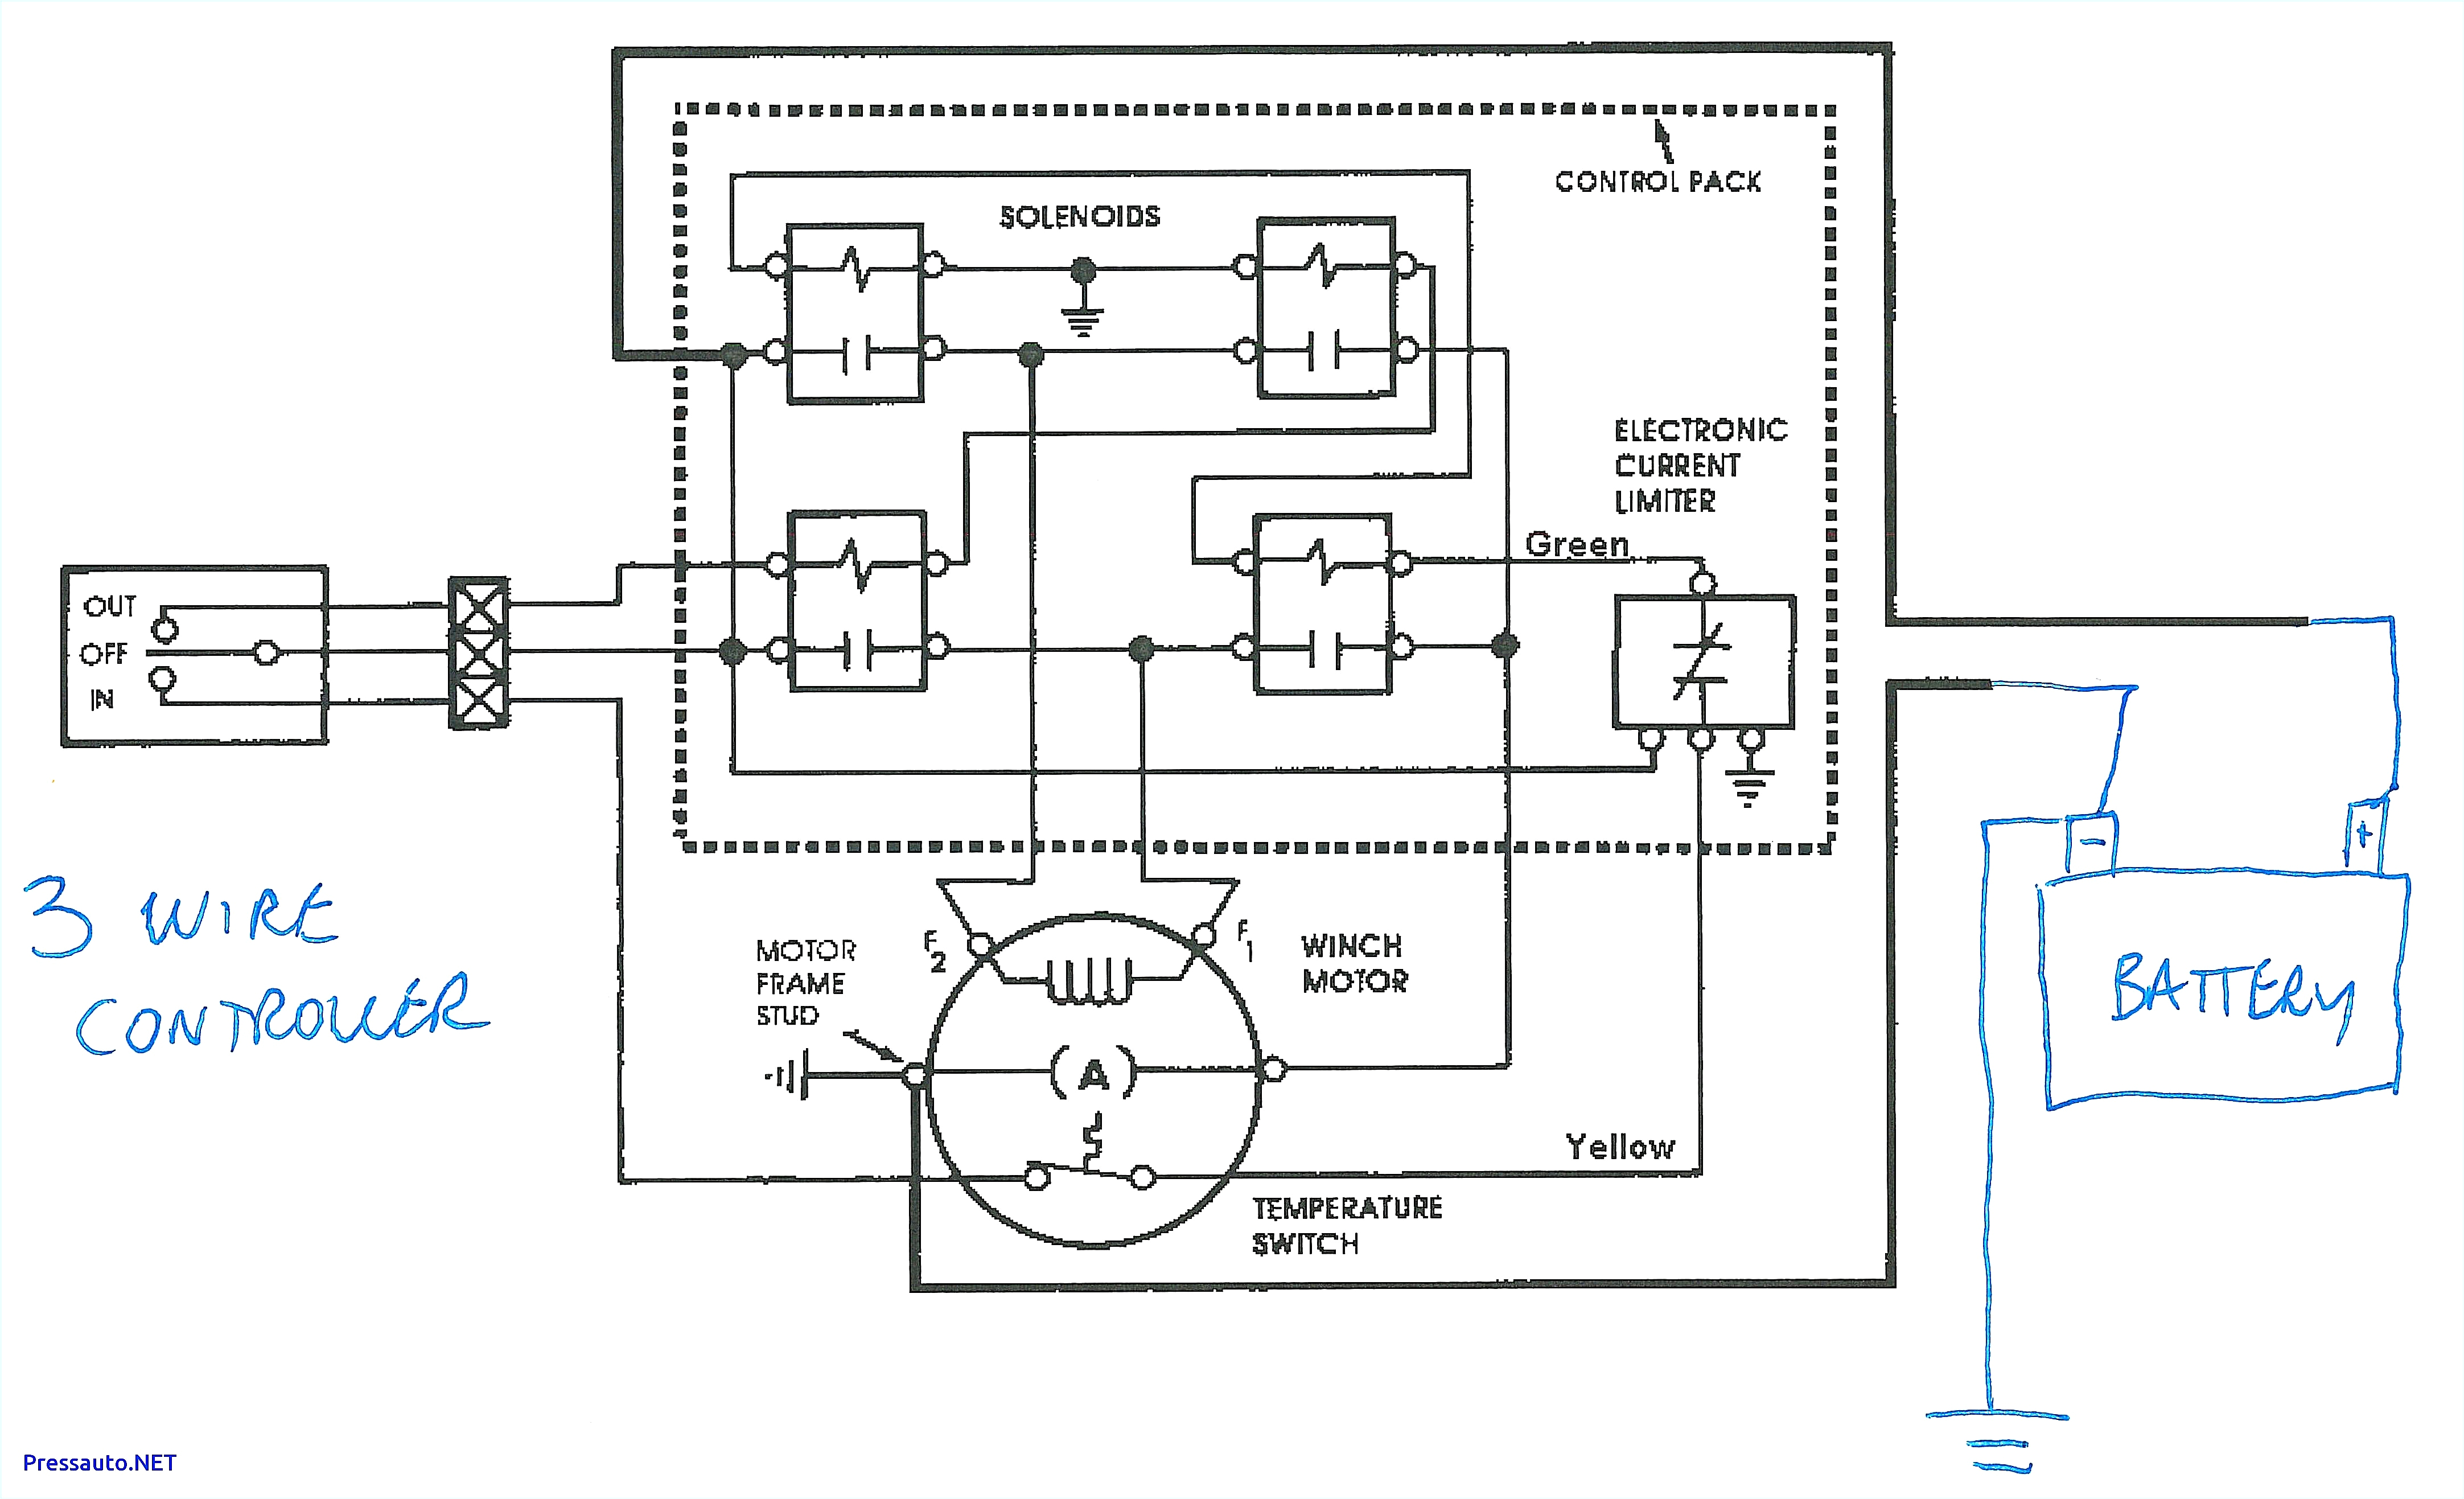 warn winch solenoid wiring wiring diagrams polaris warn atv winch wiring diagram warn atv wiring diagram